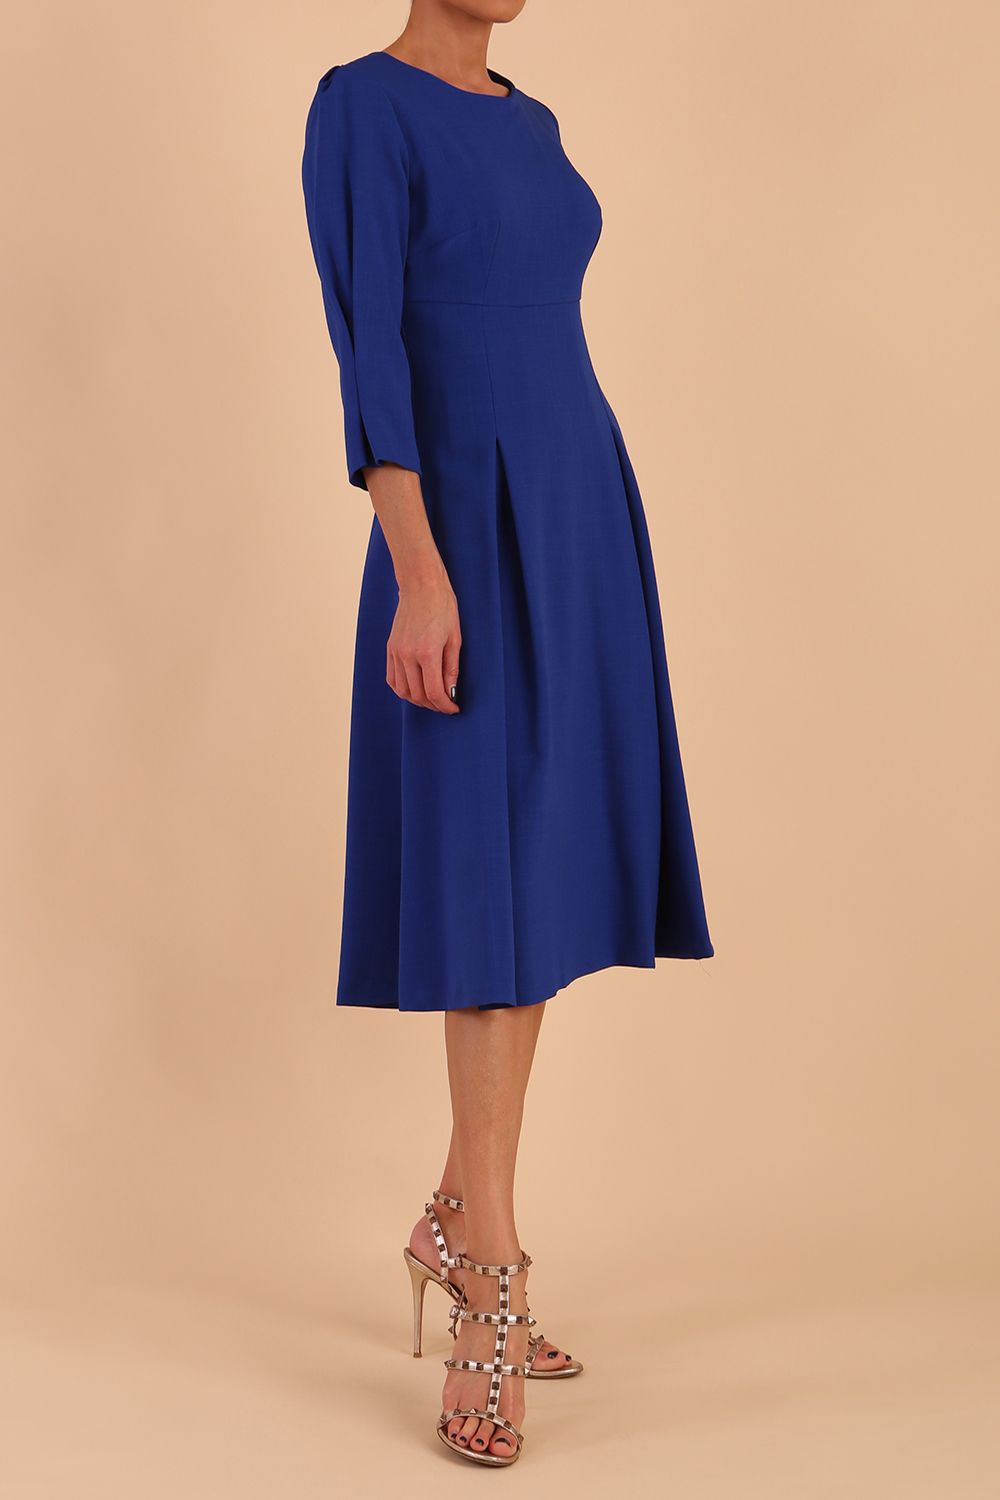 blonde model is wearing diva catwalk harpsden a-line skirt 3/4 sleeve swing dress with rounded neckline in cobalt blue front